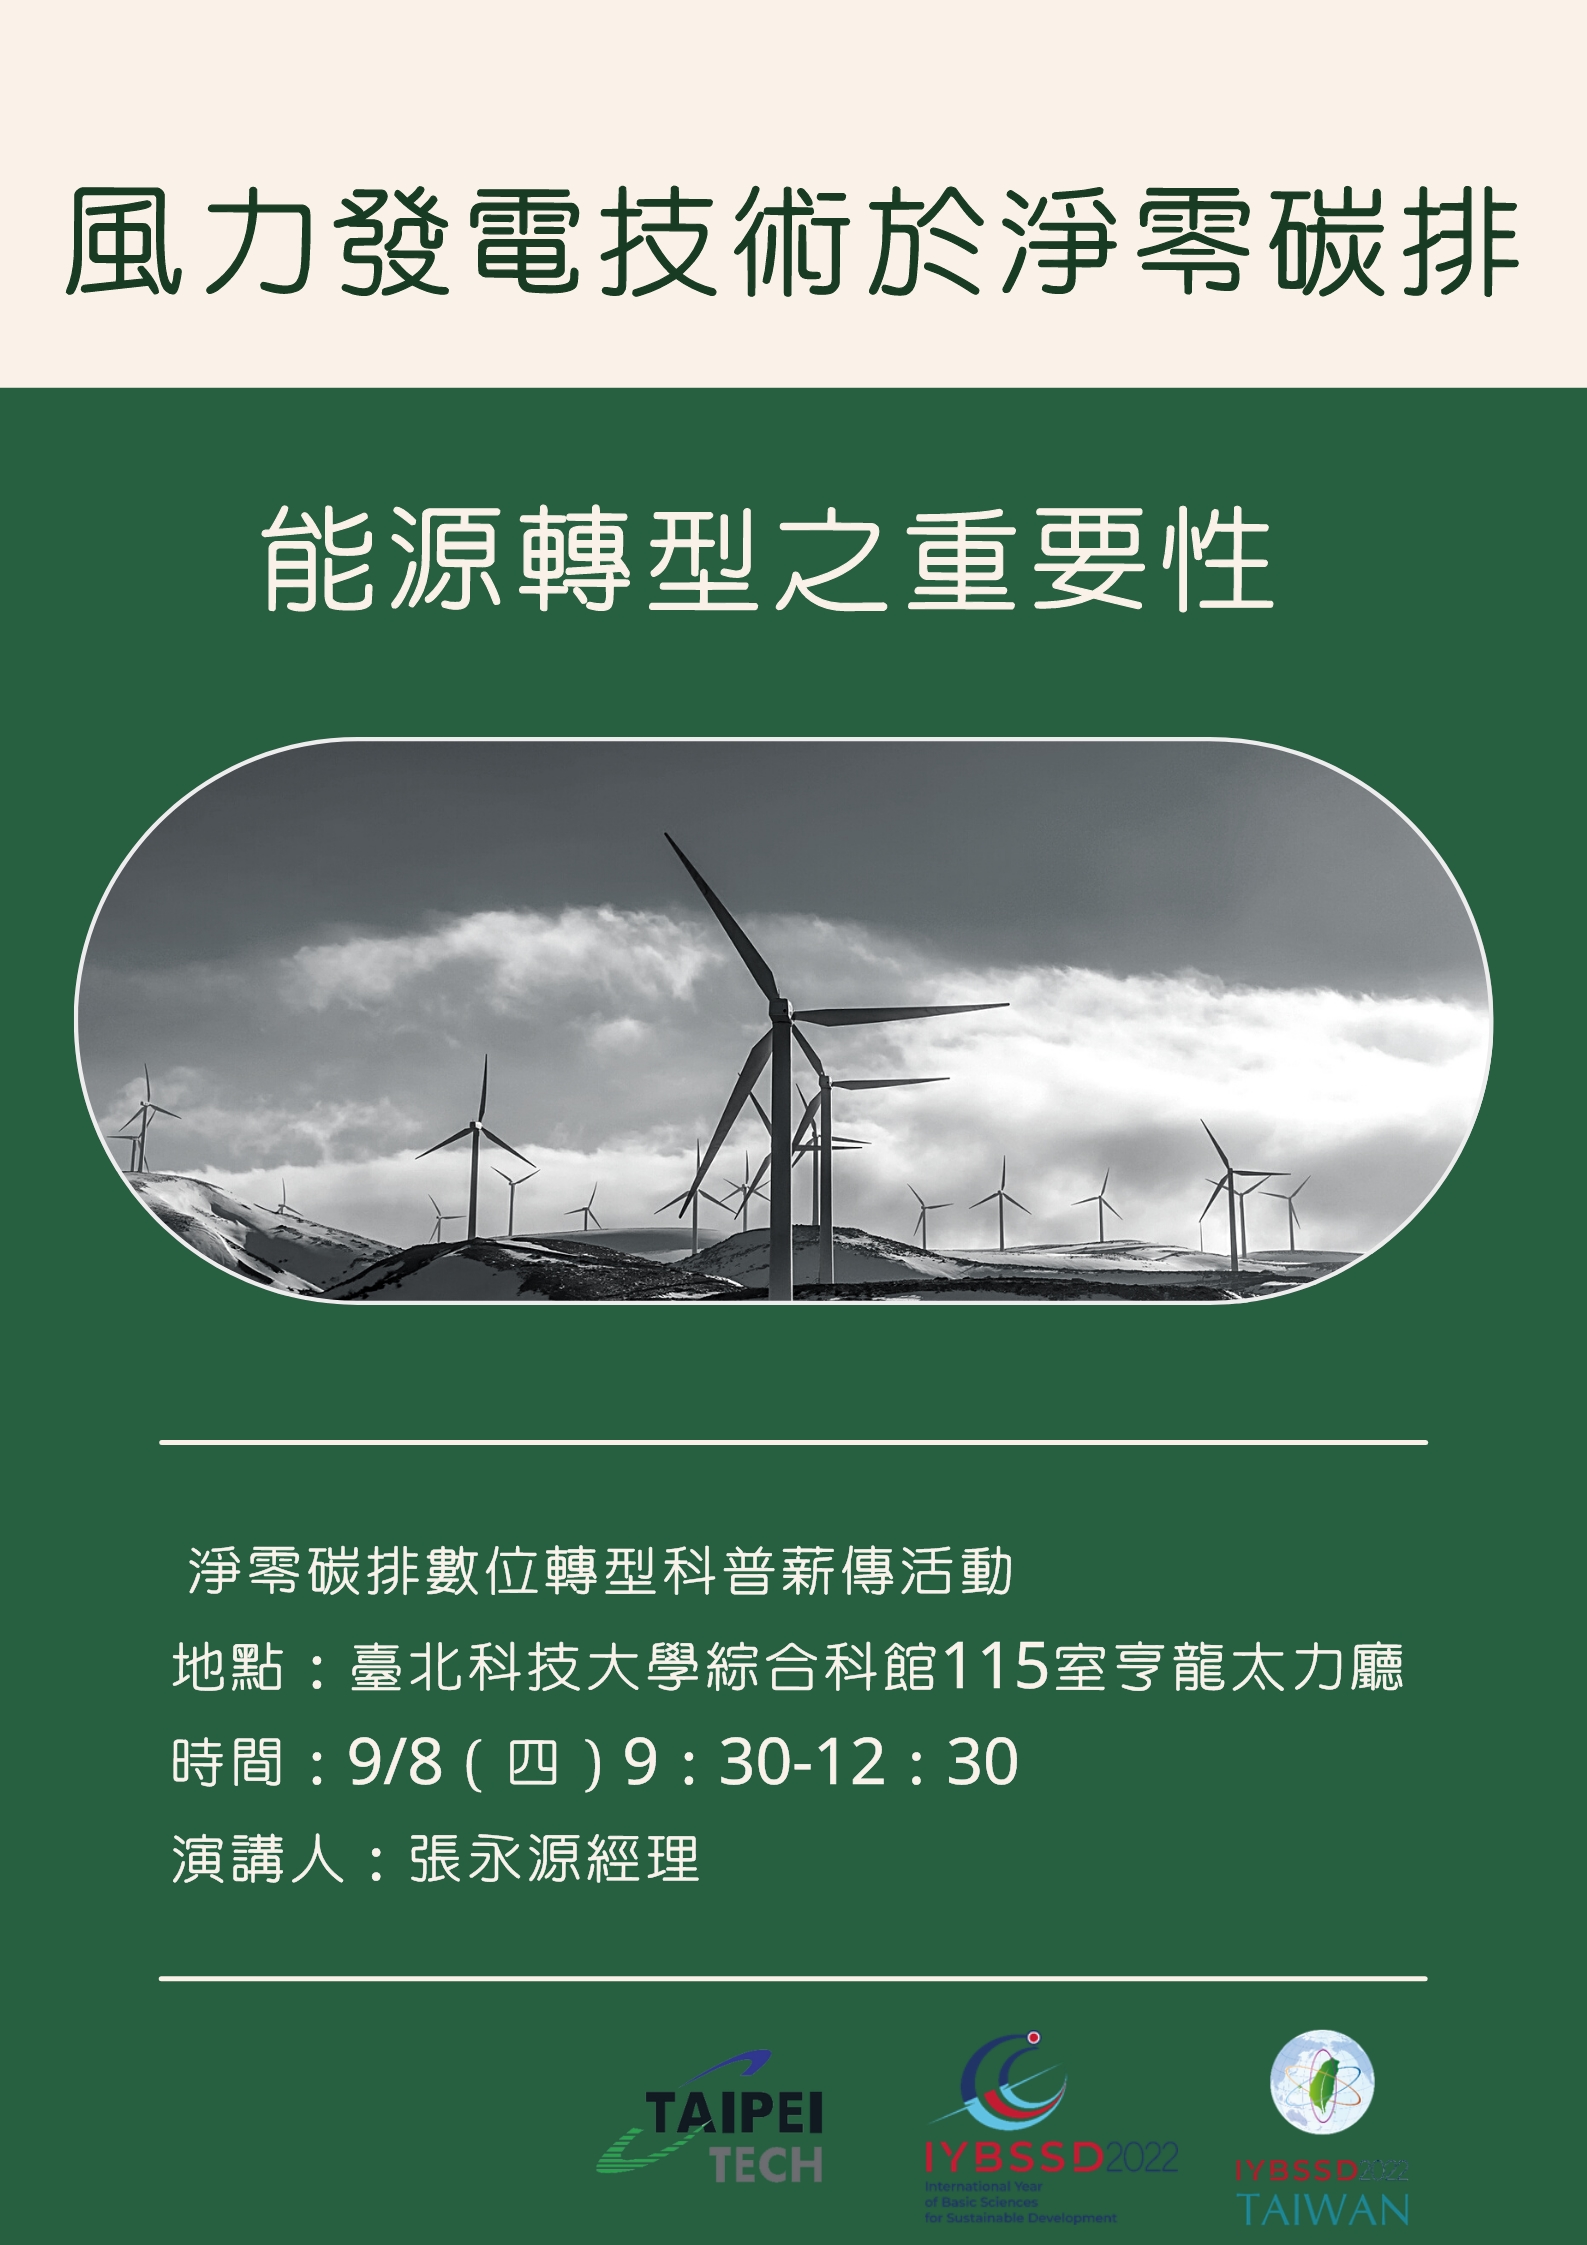 風力發電技術於淨零碳排能源轉型之重要性 Promotional Graphics or Posters